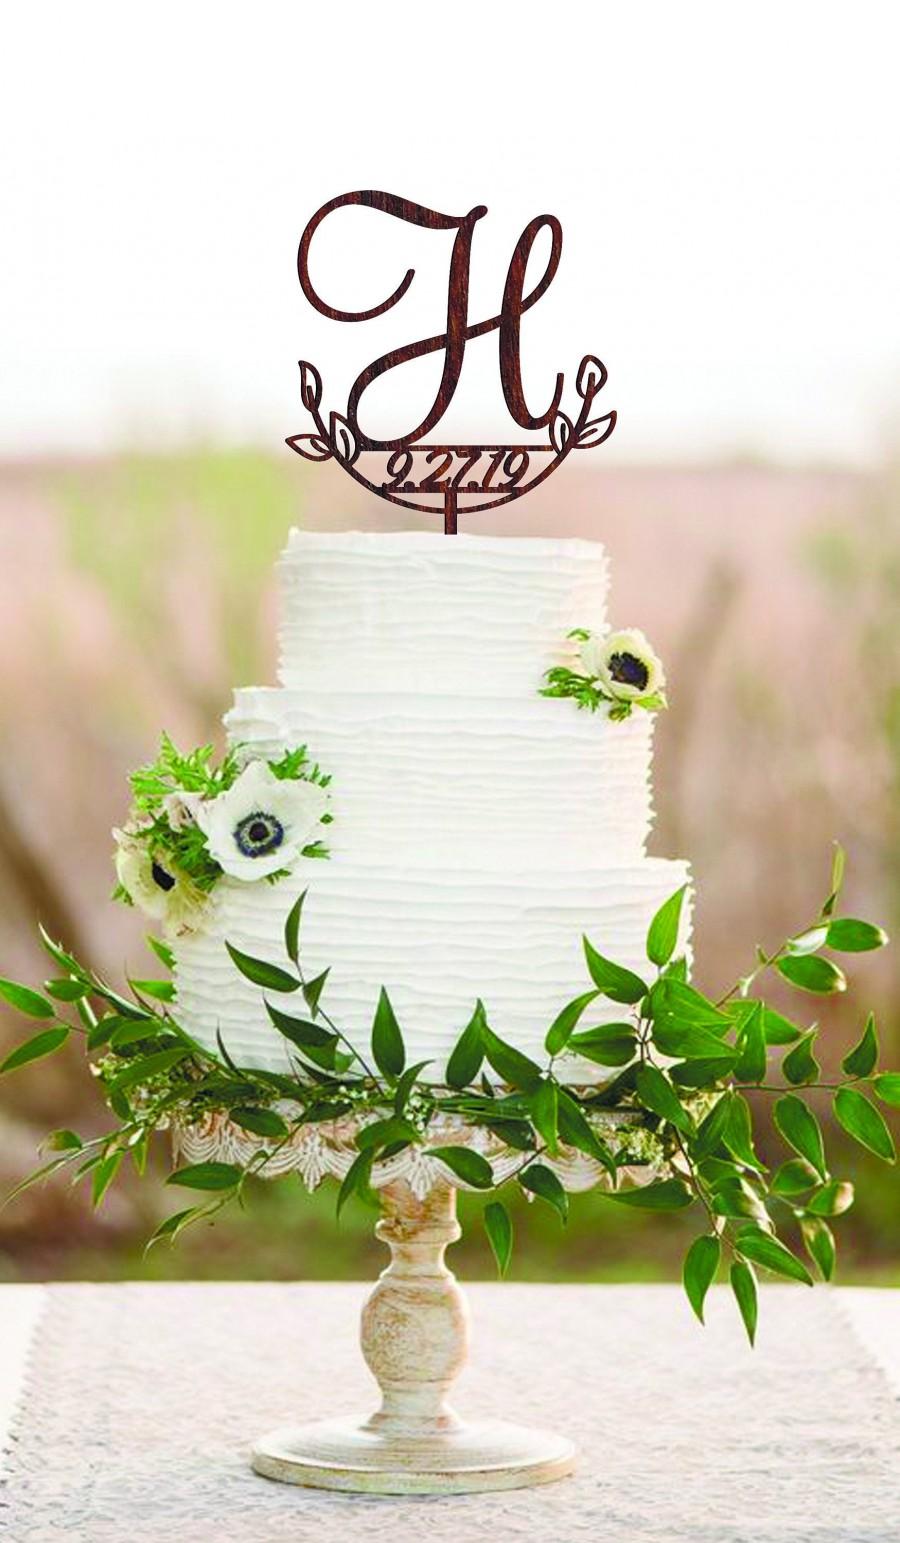 Mariage - H cake topper date Wedding cake topper H Cake toppers for wedding Initial cake topper Wood monogram cake topper Rustic cake topper wedding H